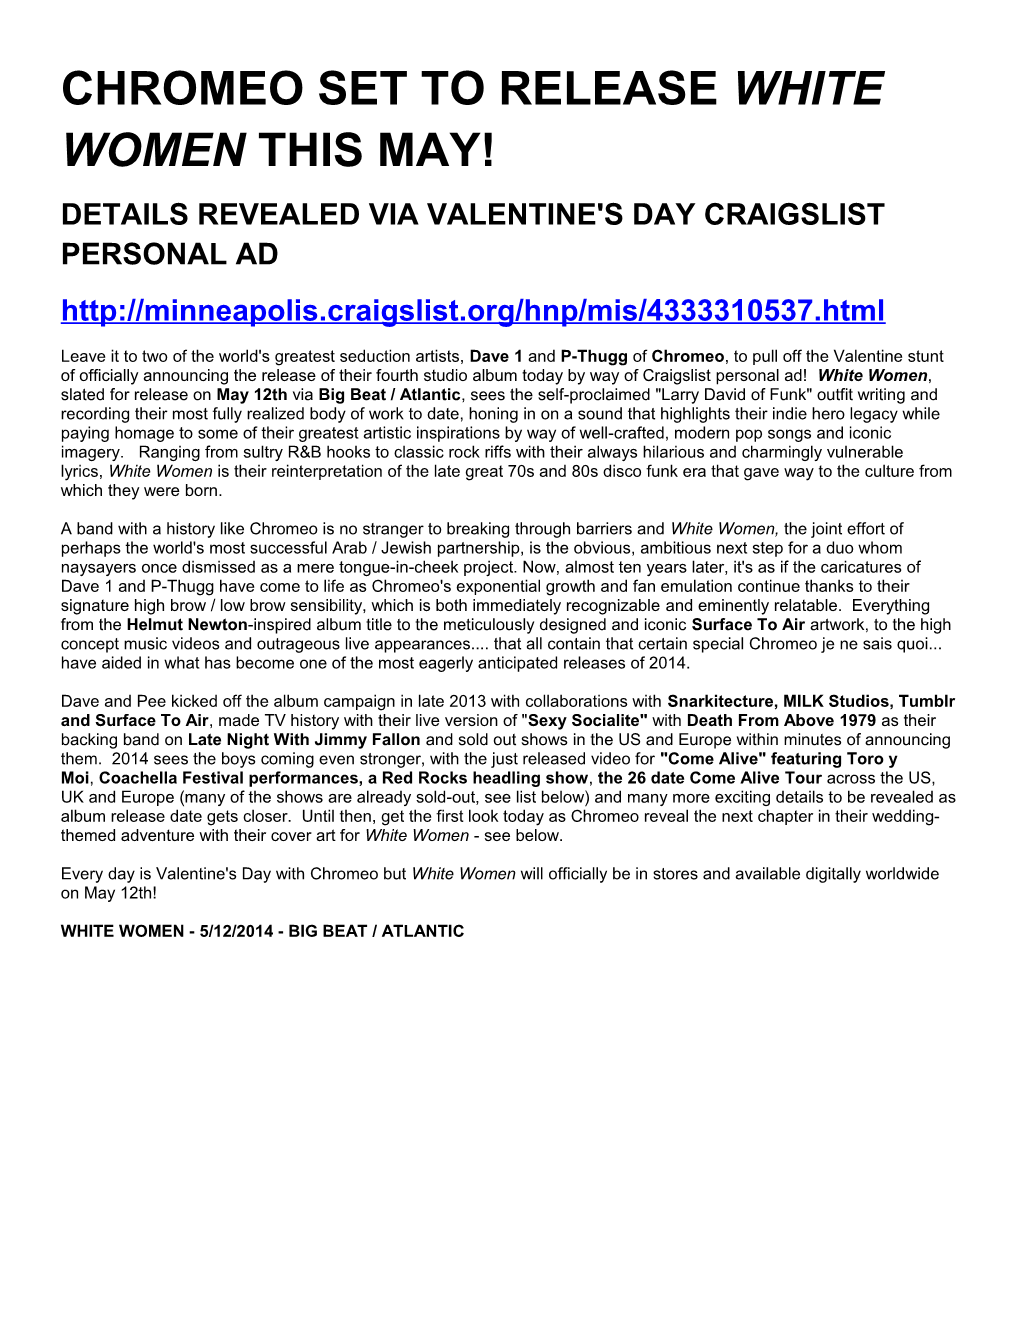 Details Revealed Via Valentine's Day Craigslist Personal Ad